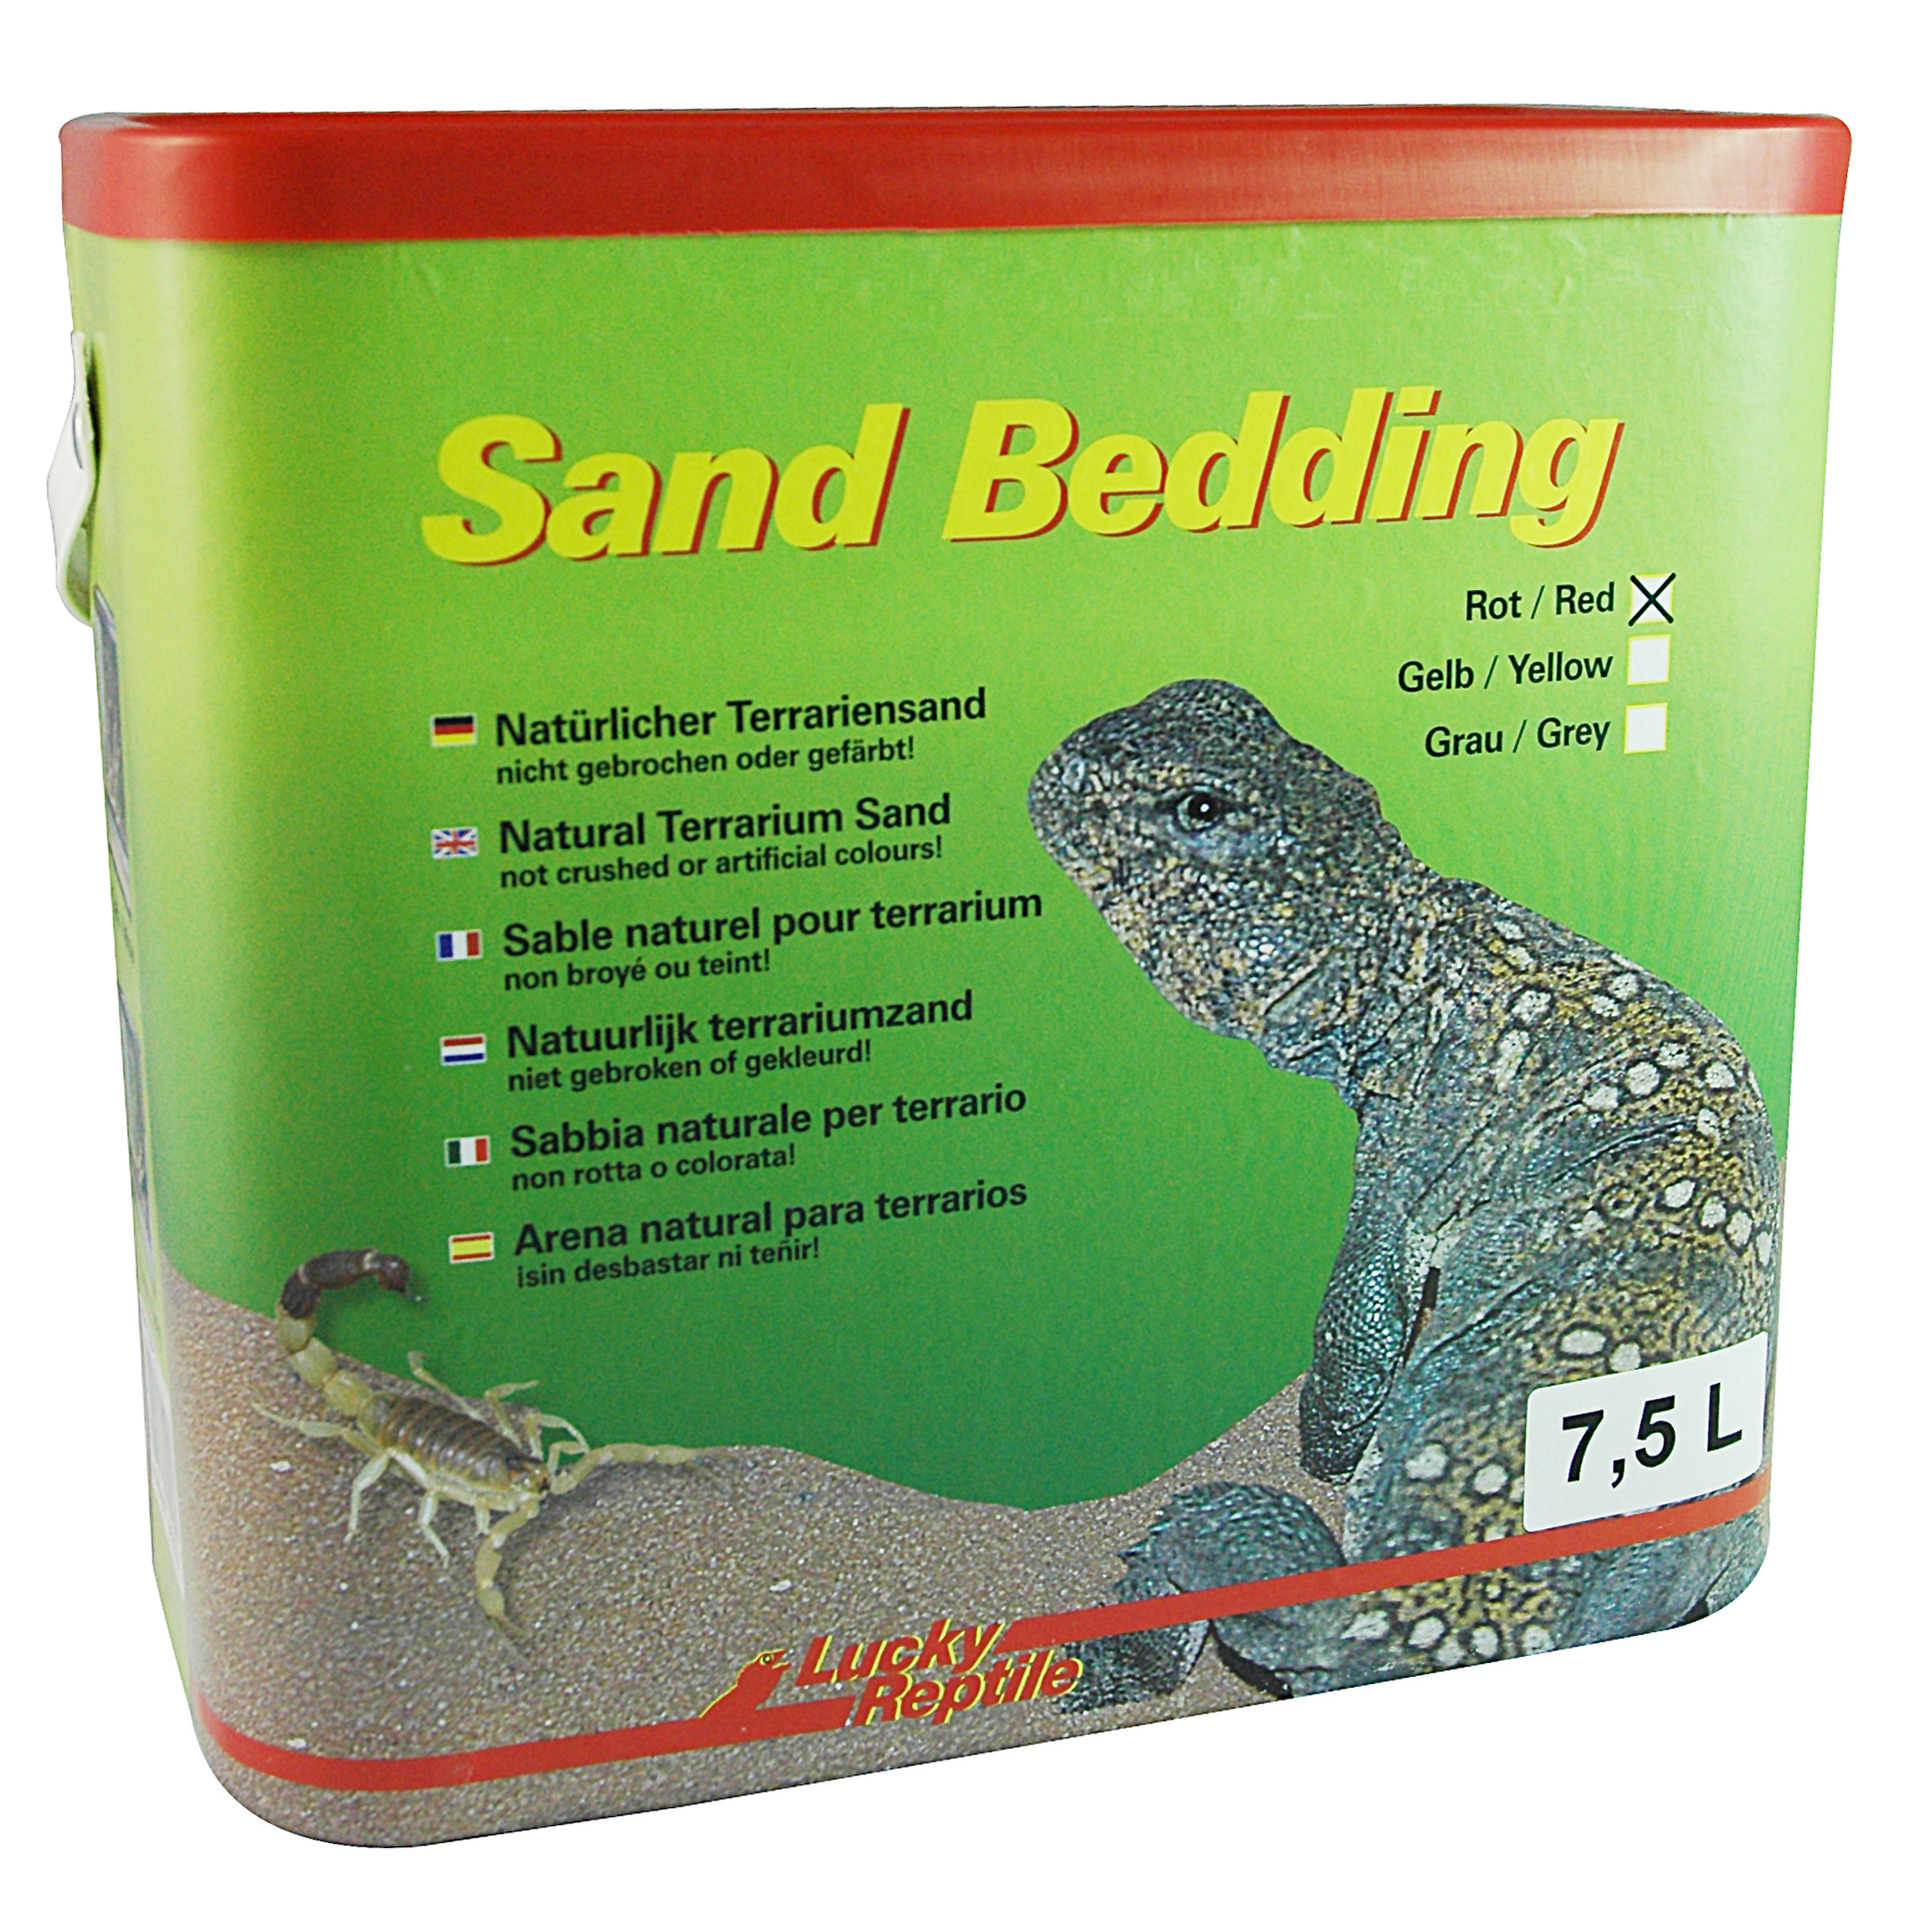 Sand Bedding